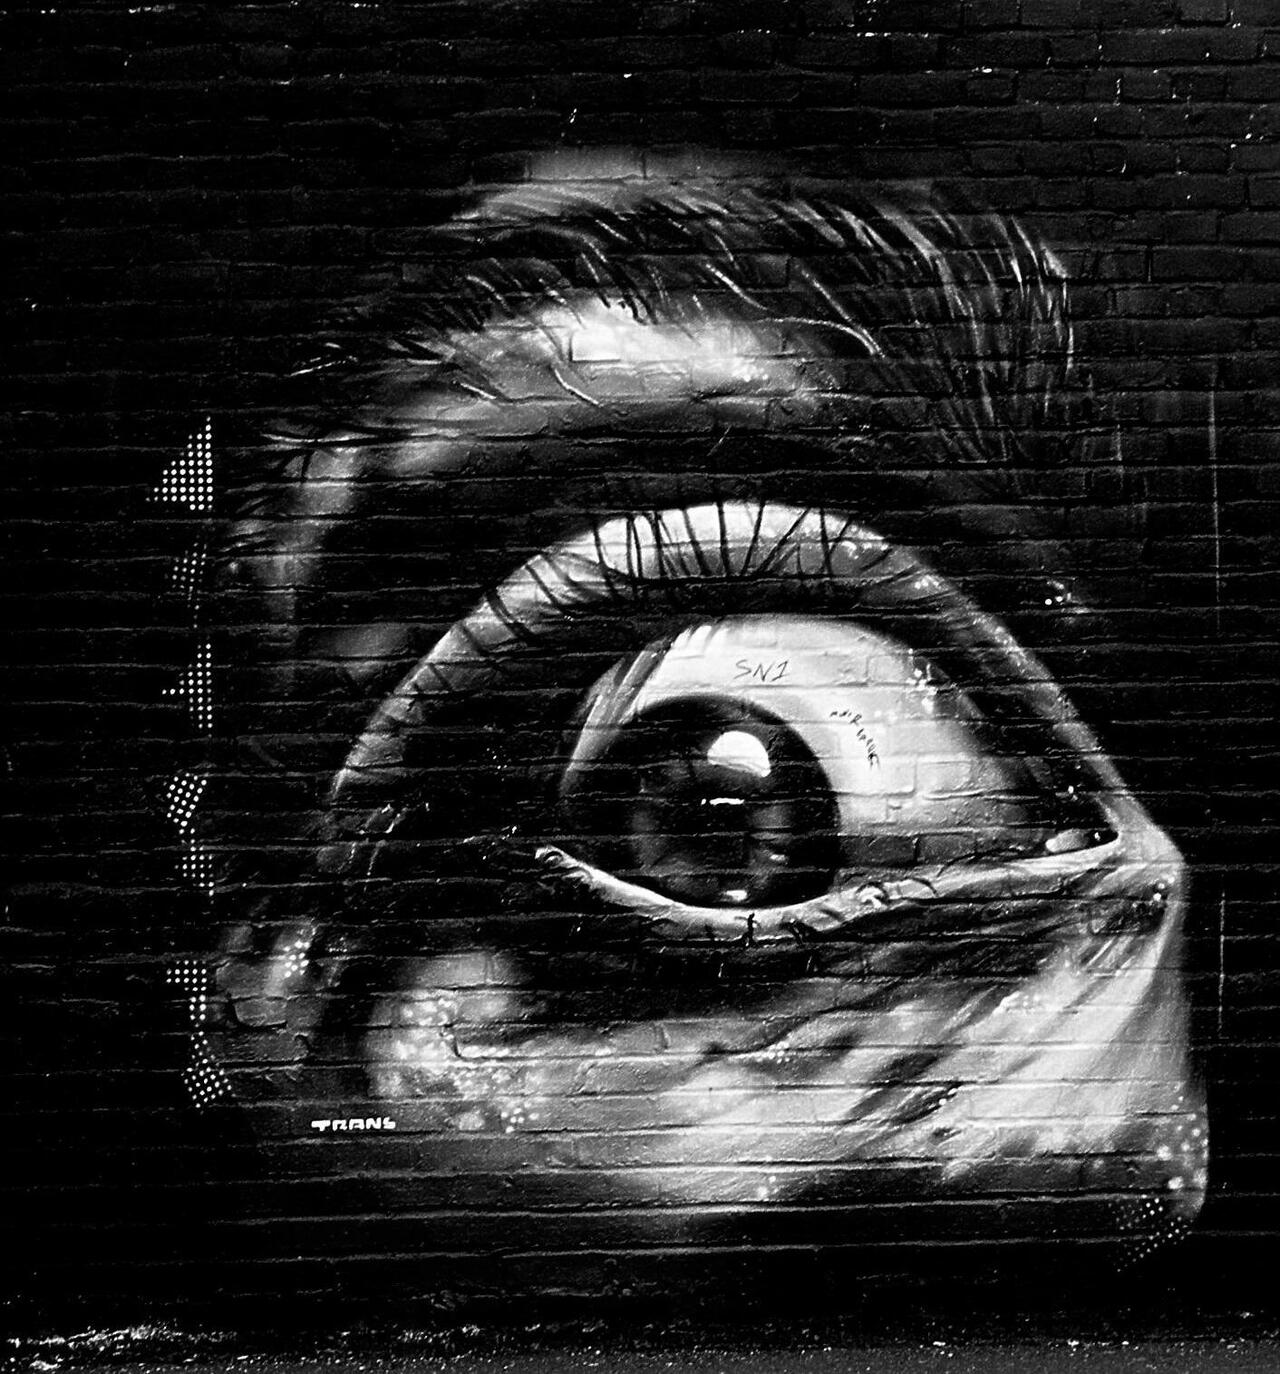 RT @LondonWalls: TRANS1 #graffiti #streetart #urbanart #wallsaround #london http://t.co/2yISj4C5Hv